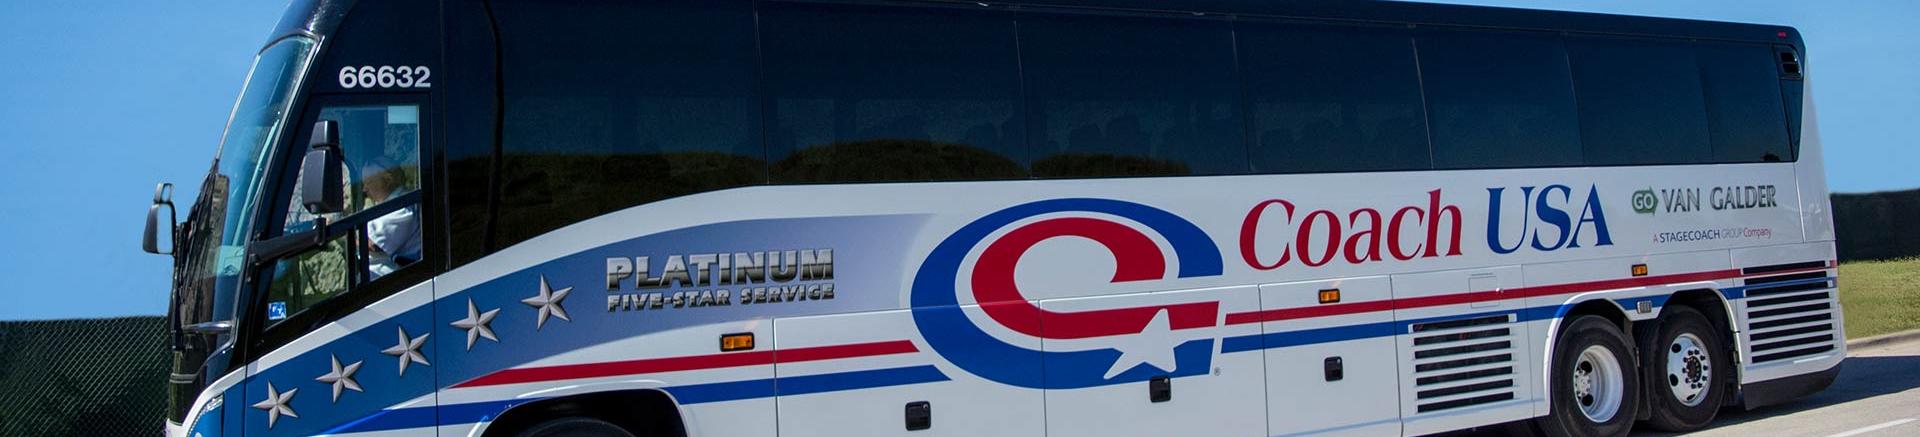 Coach USA wedding transportation charter buses